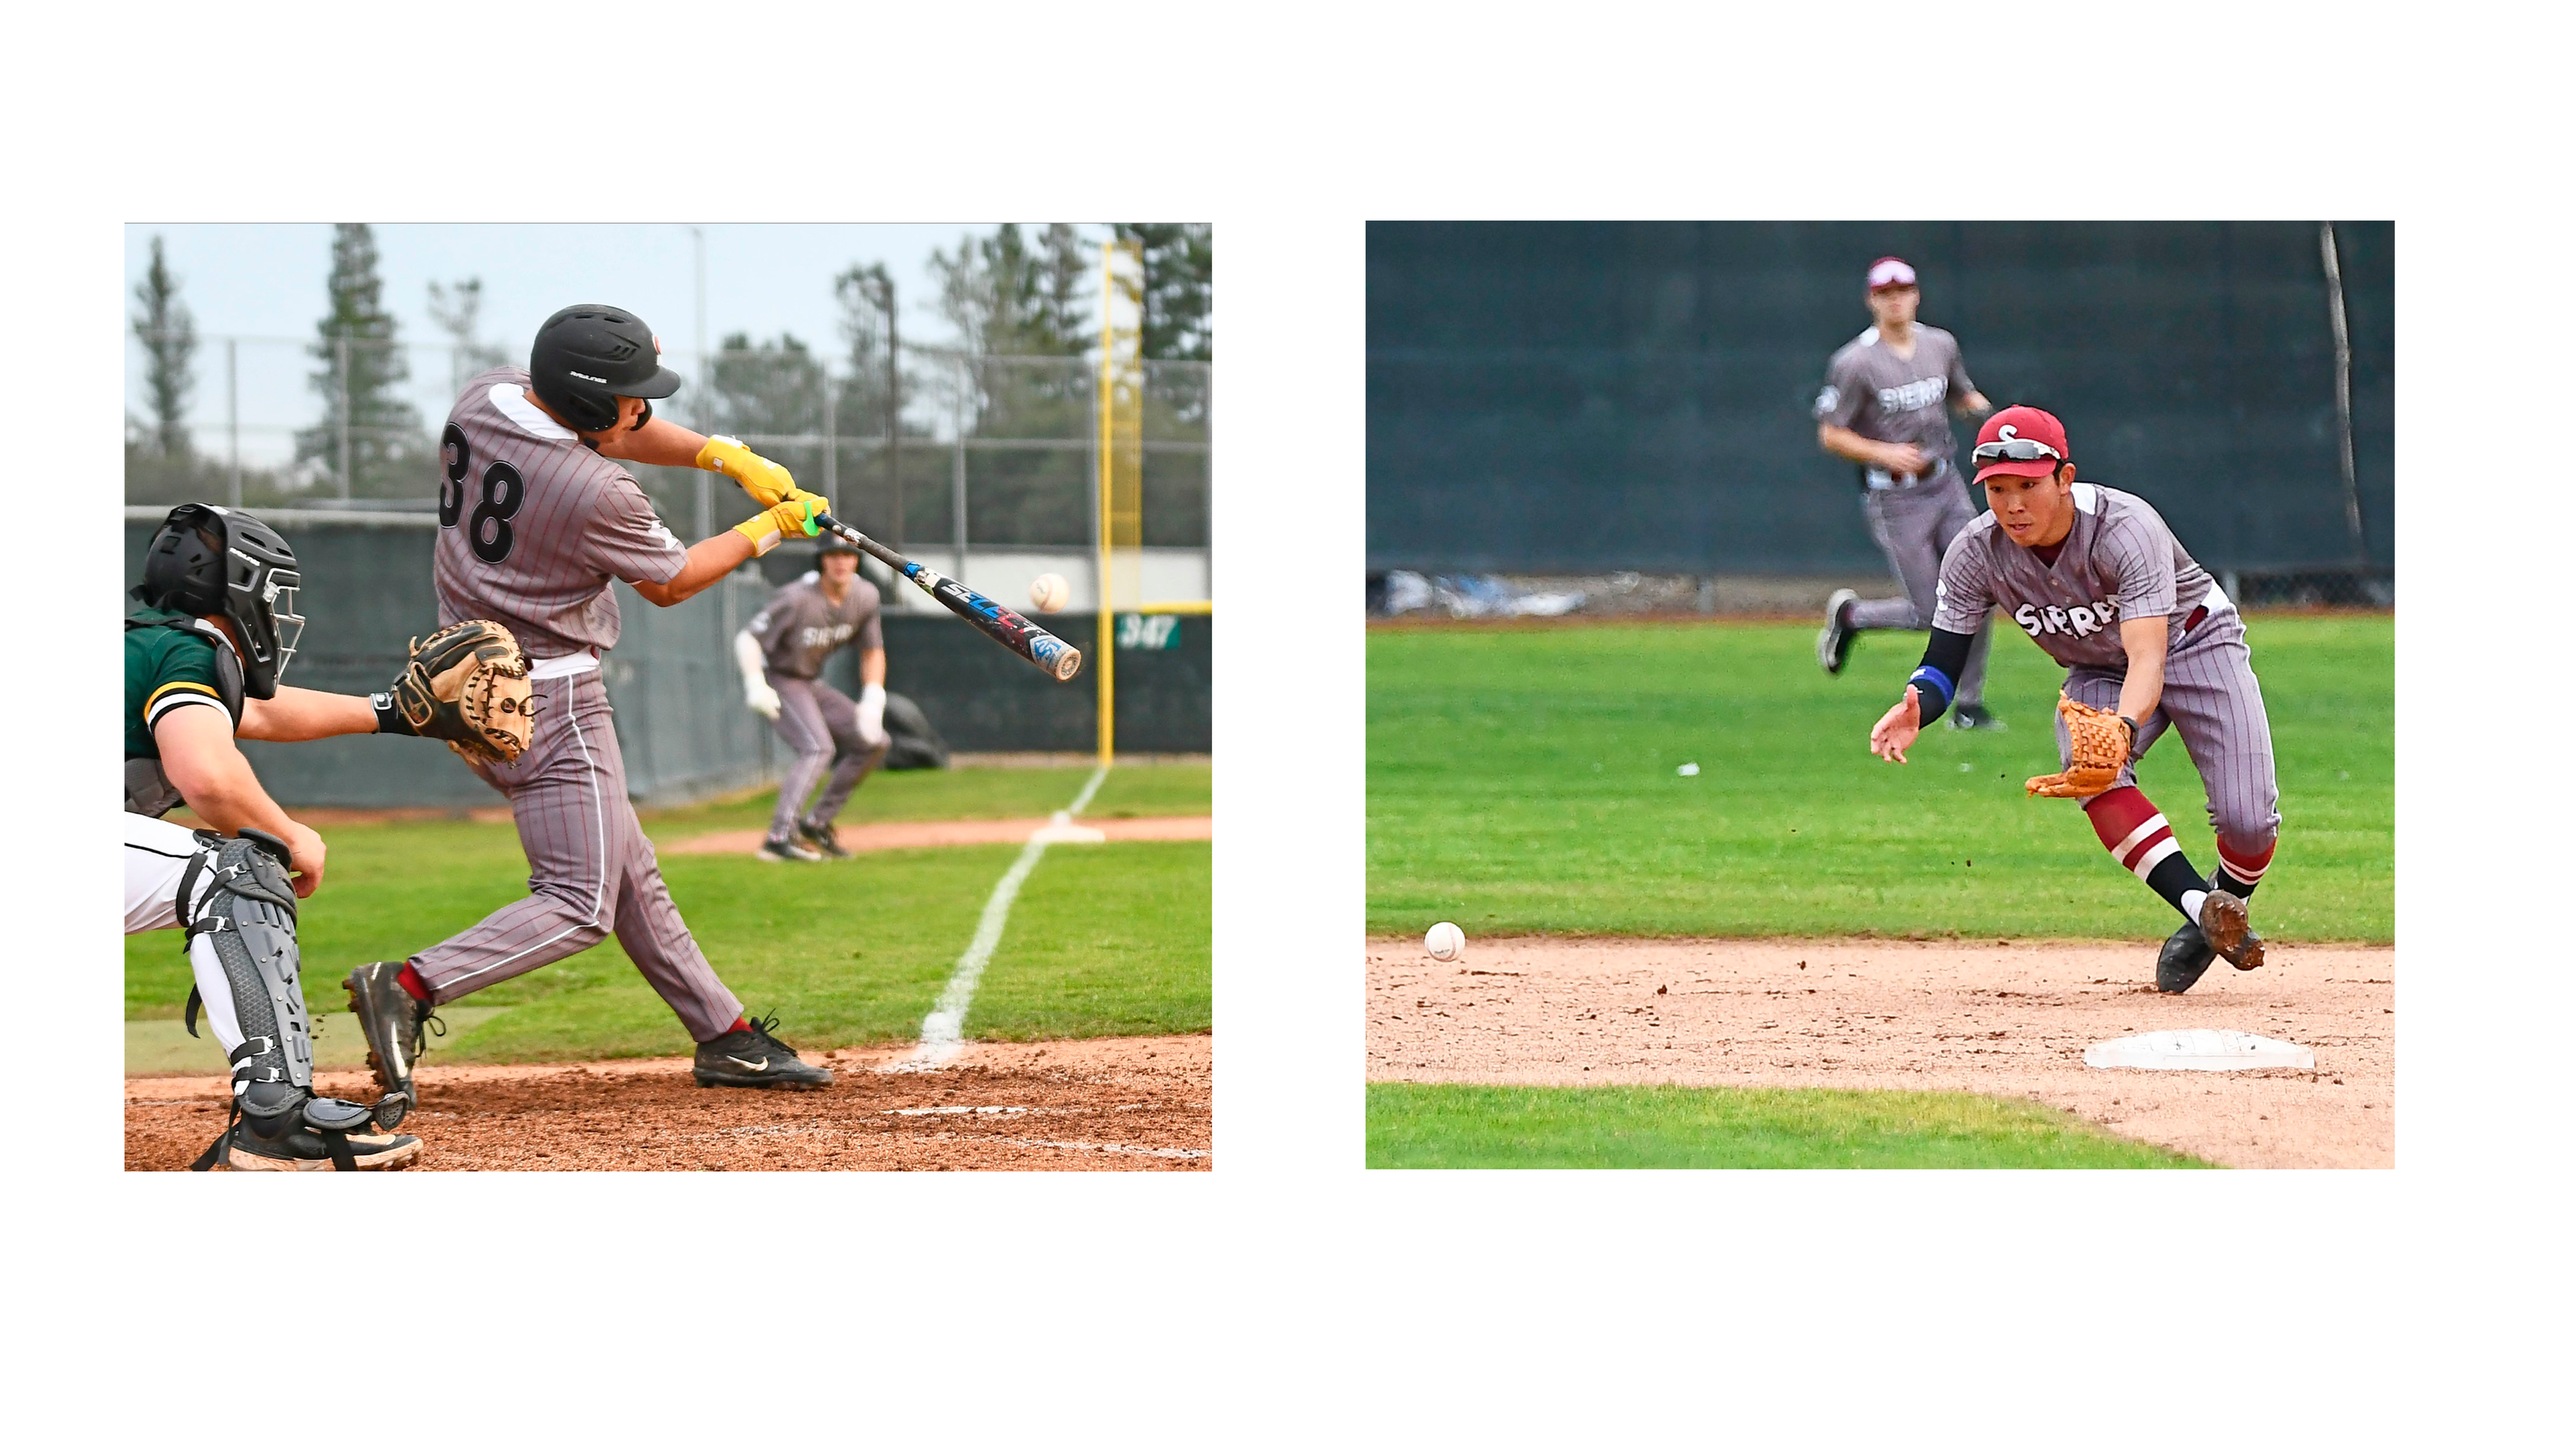 2 images- Sierra batting; Sierra catching